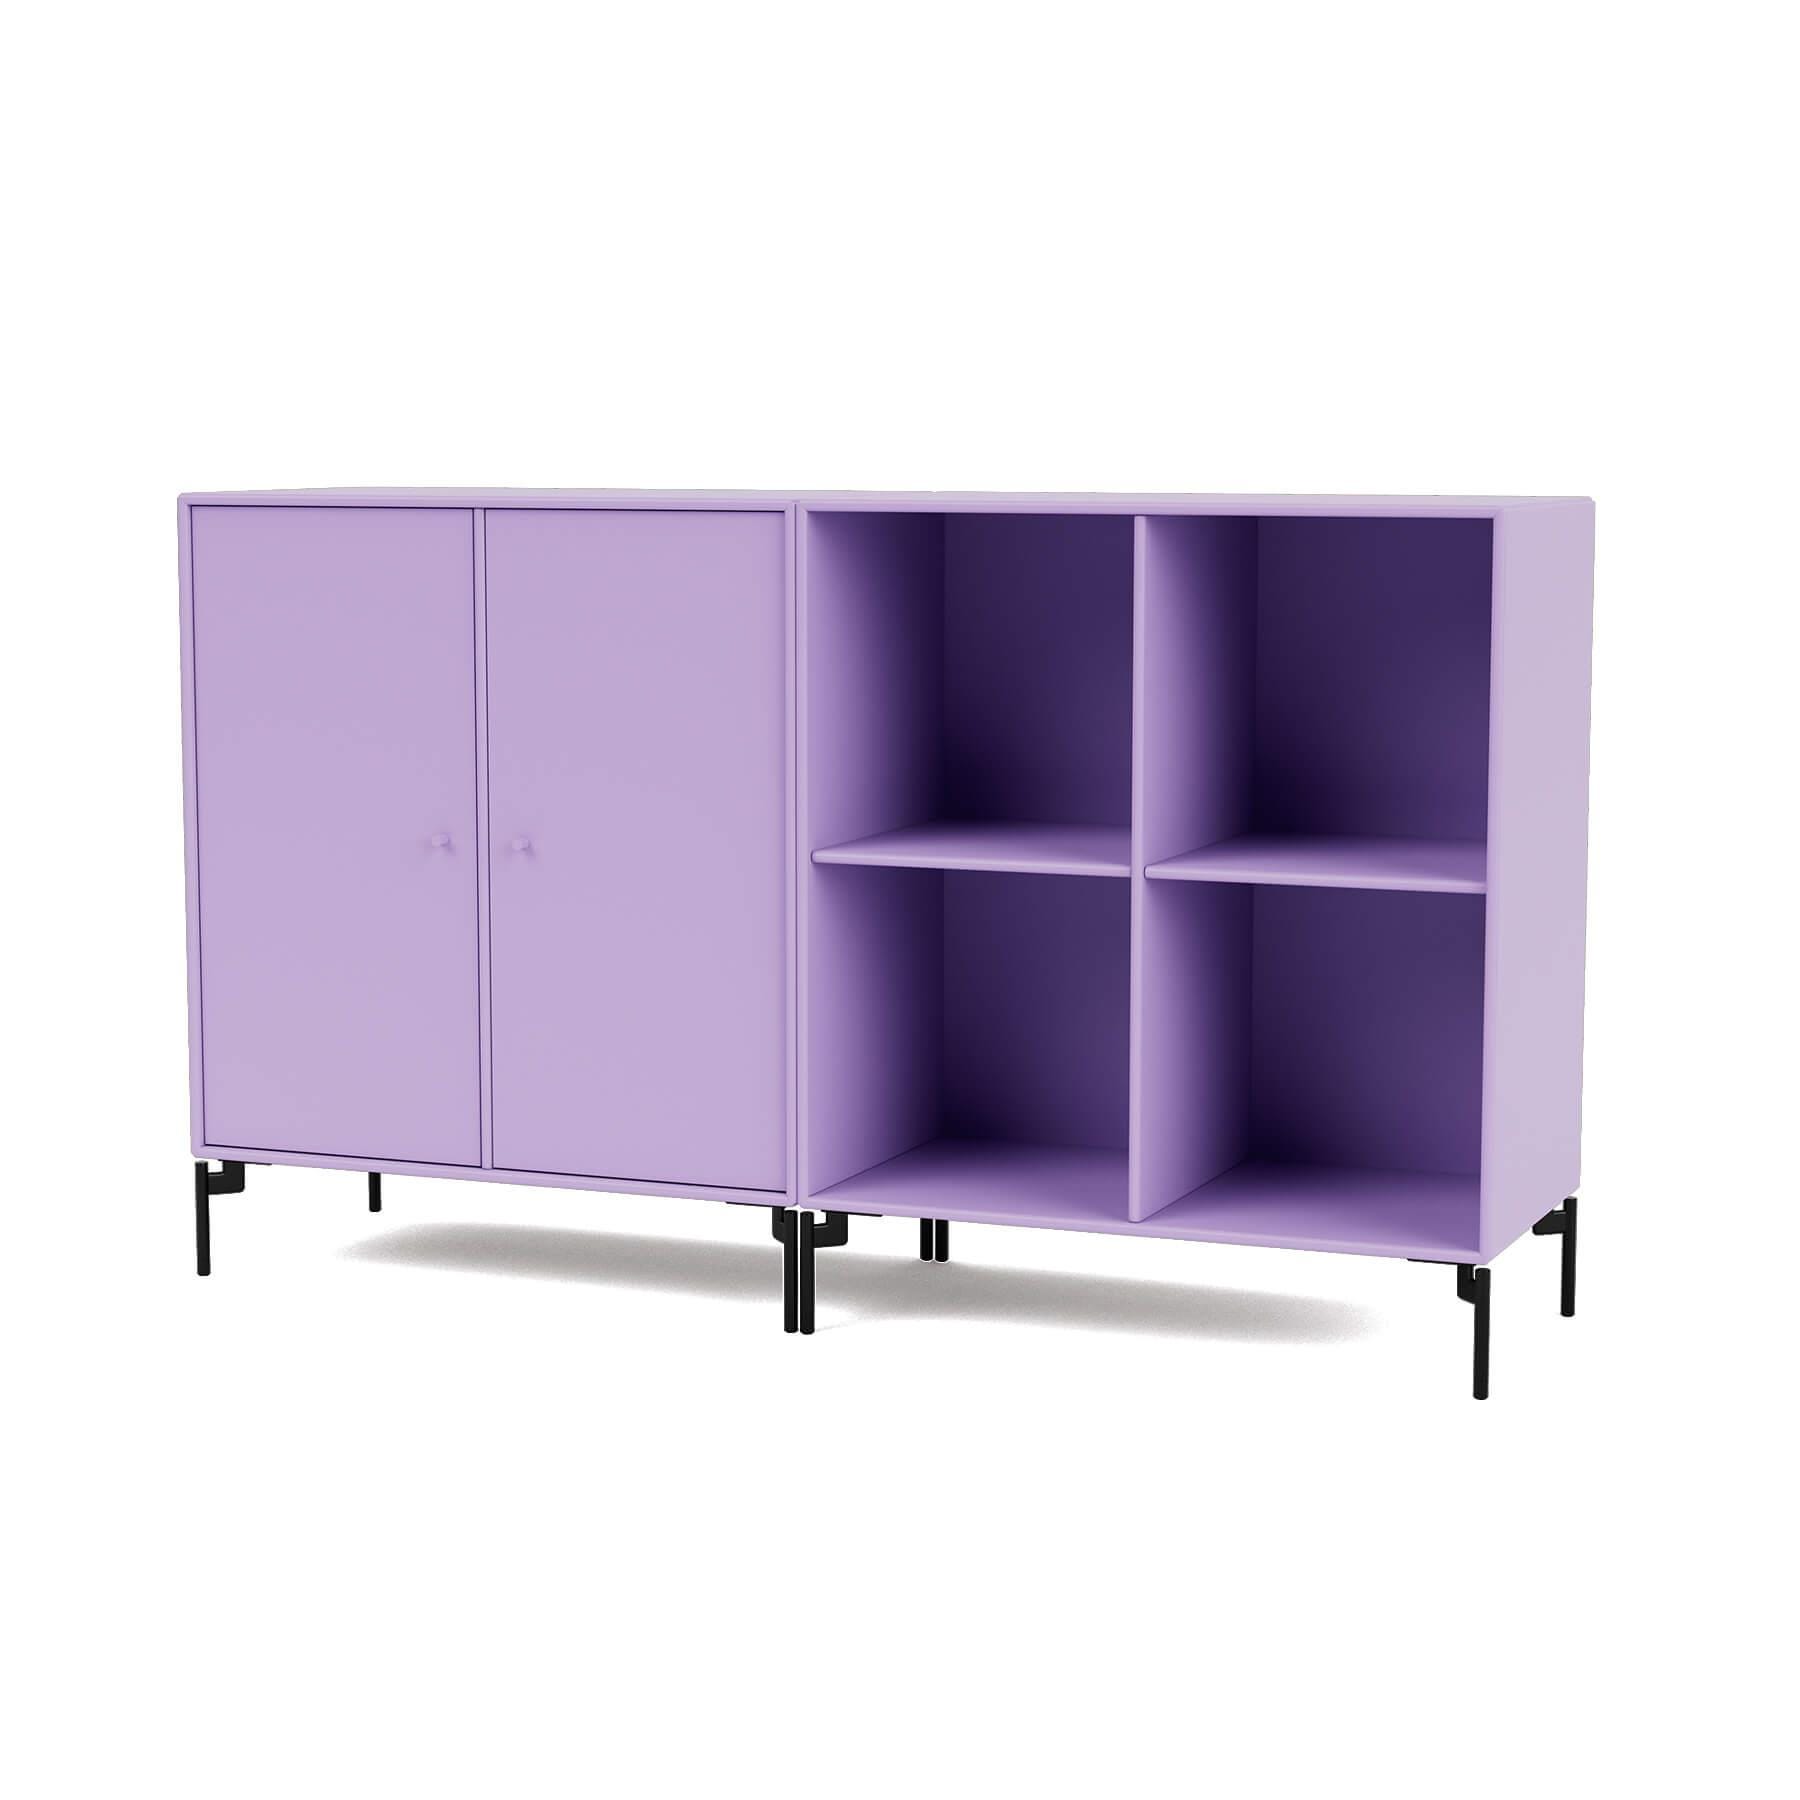 Montana Pair Classic Sideboard Iris Black Legs Purple Designer Furniture From Holloways Of Ludlow